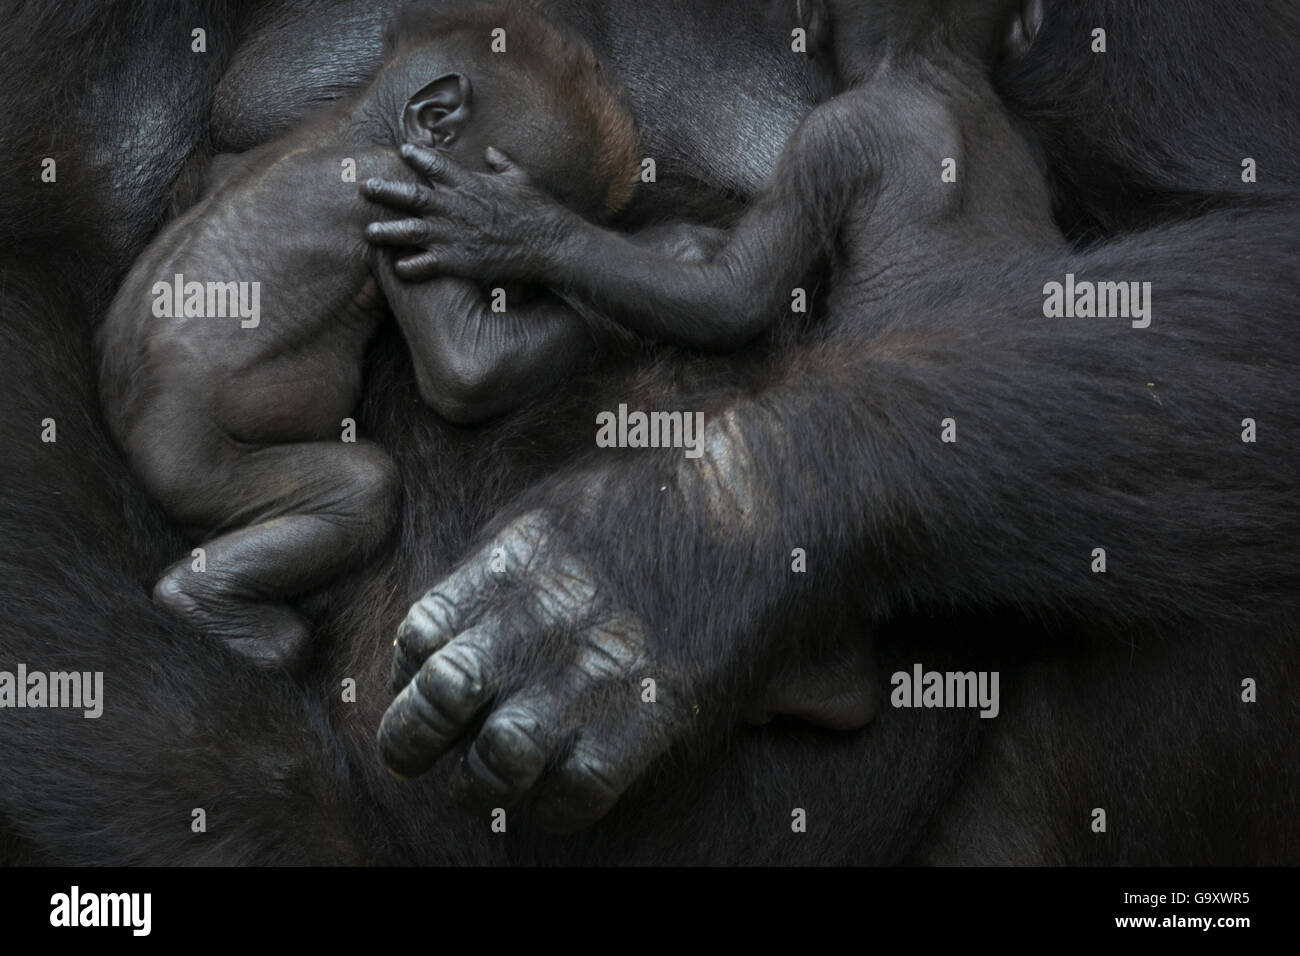 https://c8.alamy.com/comp/G9XWR5/western-lowland-gorilla-gorilla-gorilla-gorilla-twin-babies-age-45-G9XWR5.jpg